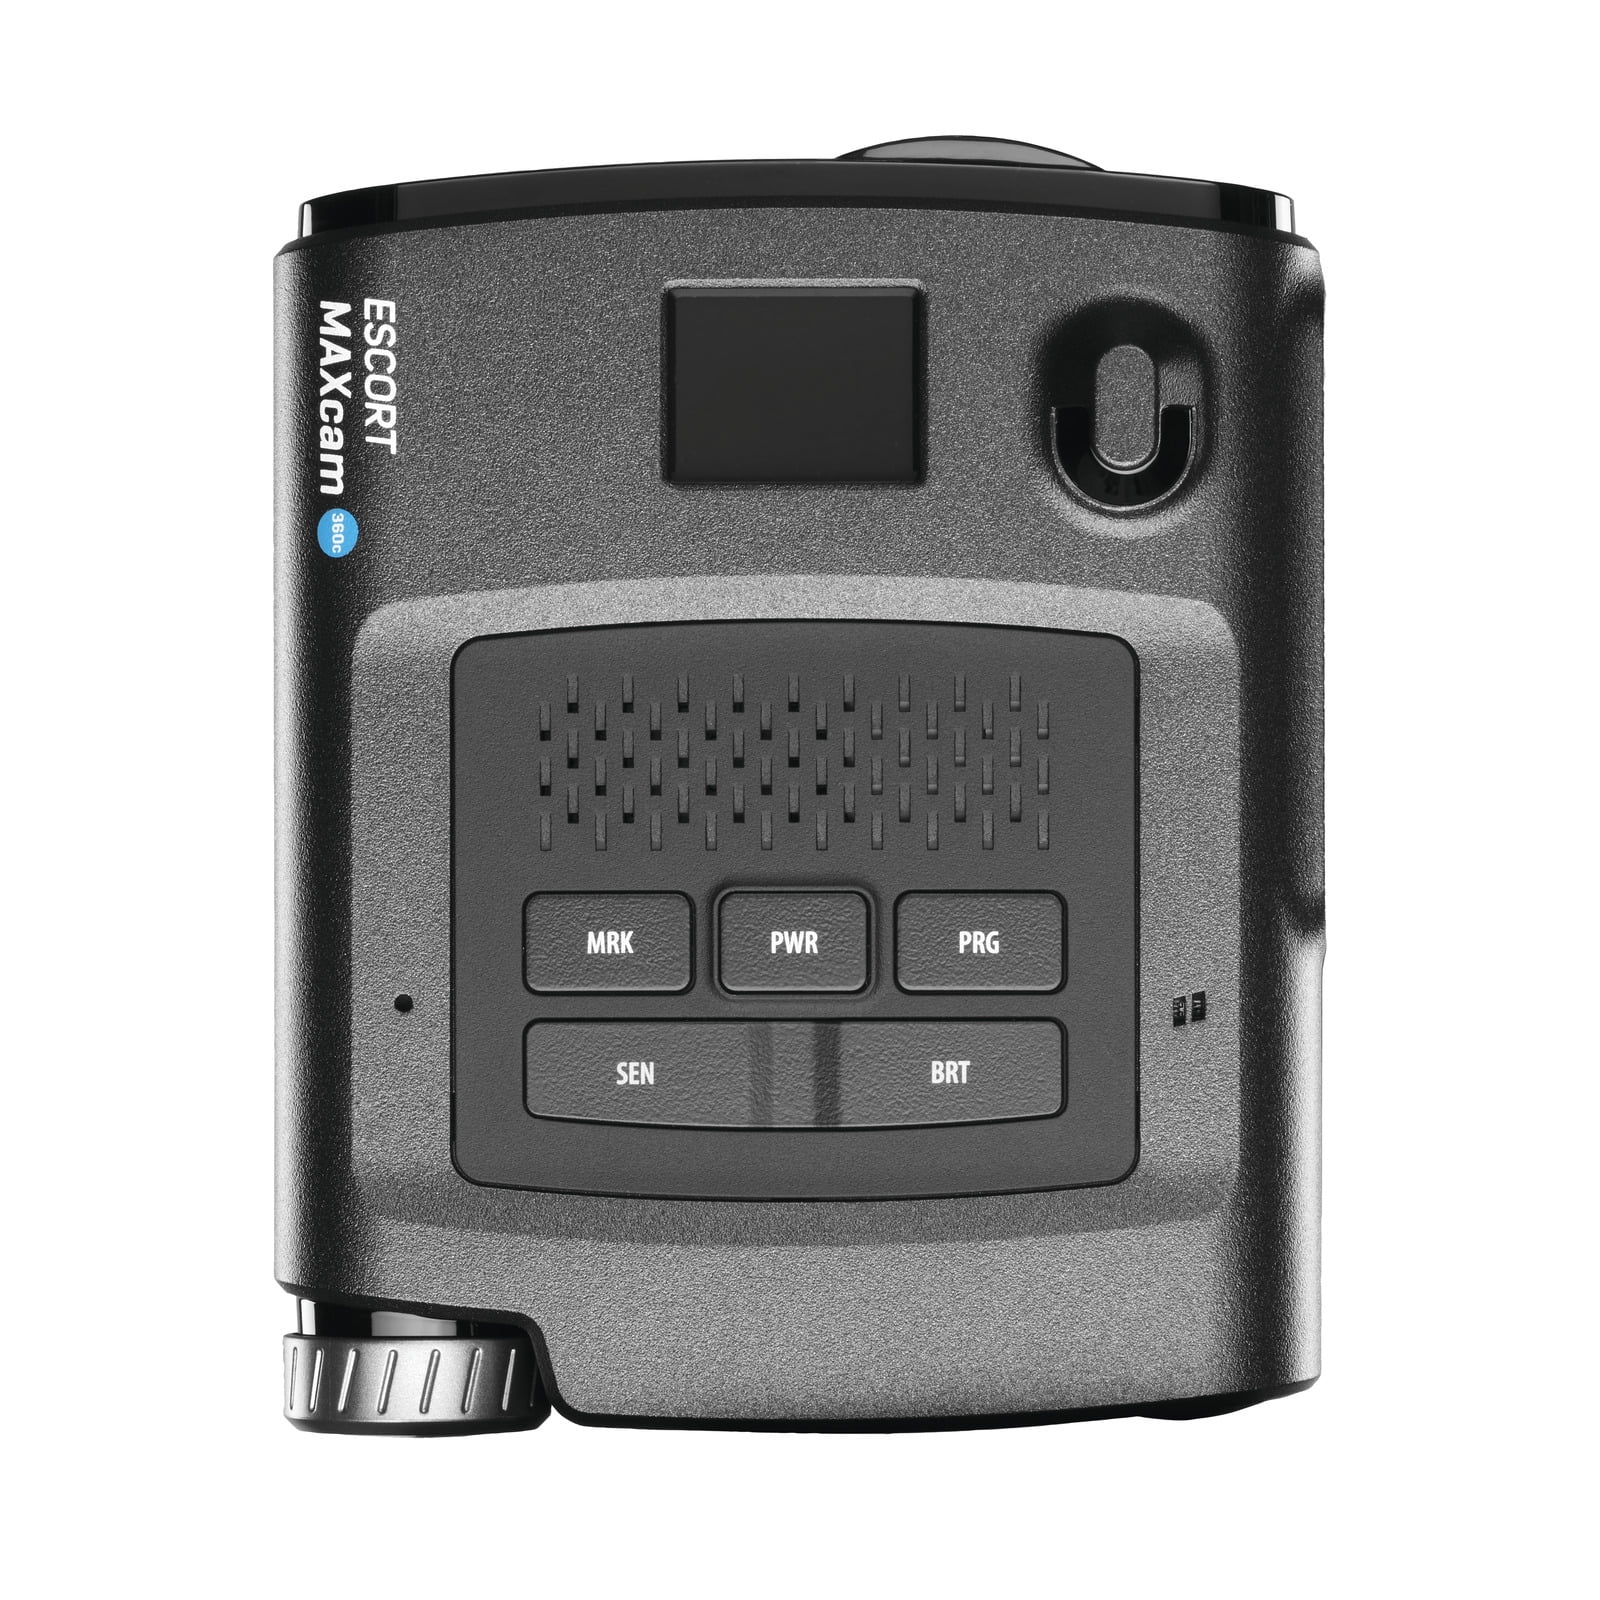 Escort MAX 360c (0100037-1) Radar Detector & Escort M1 Dash Camera